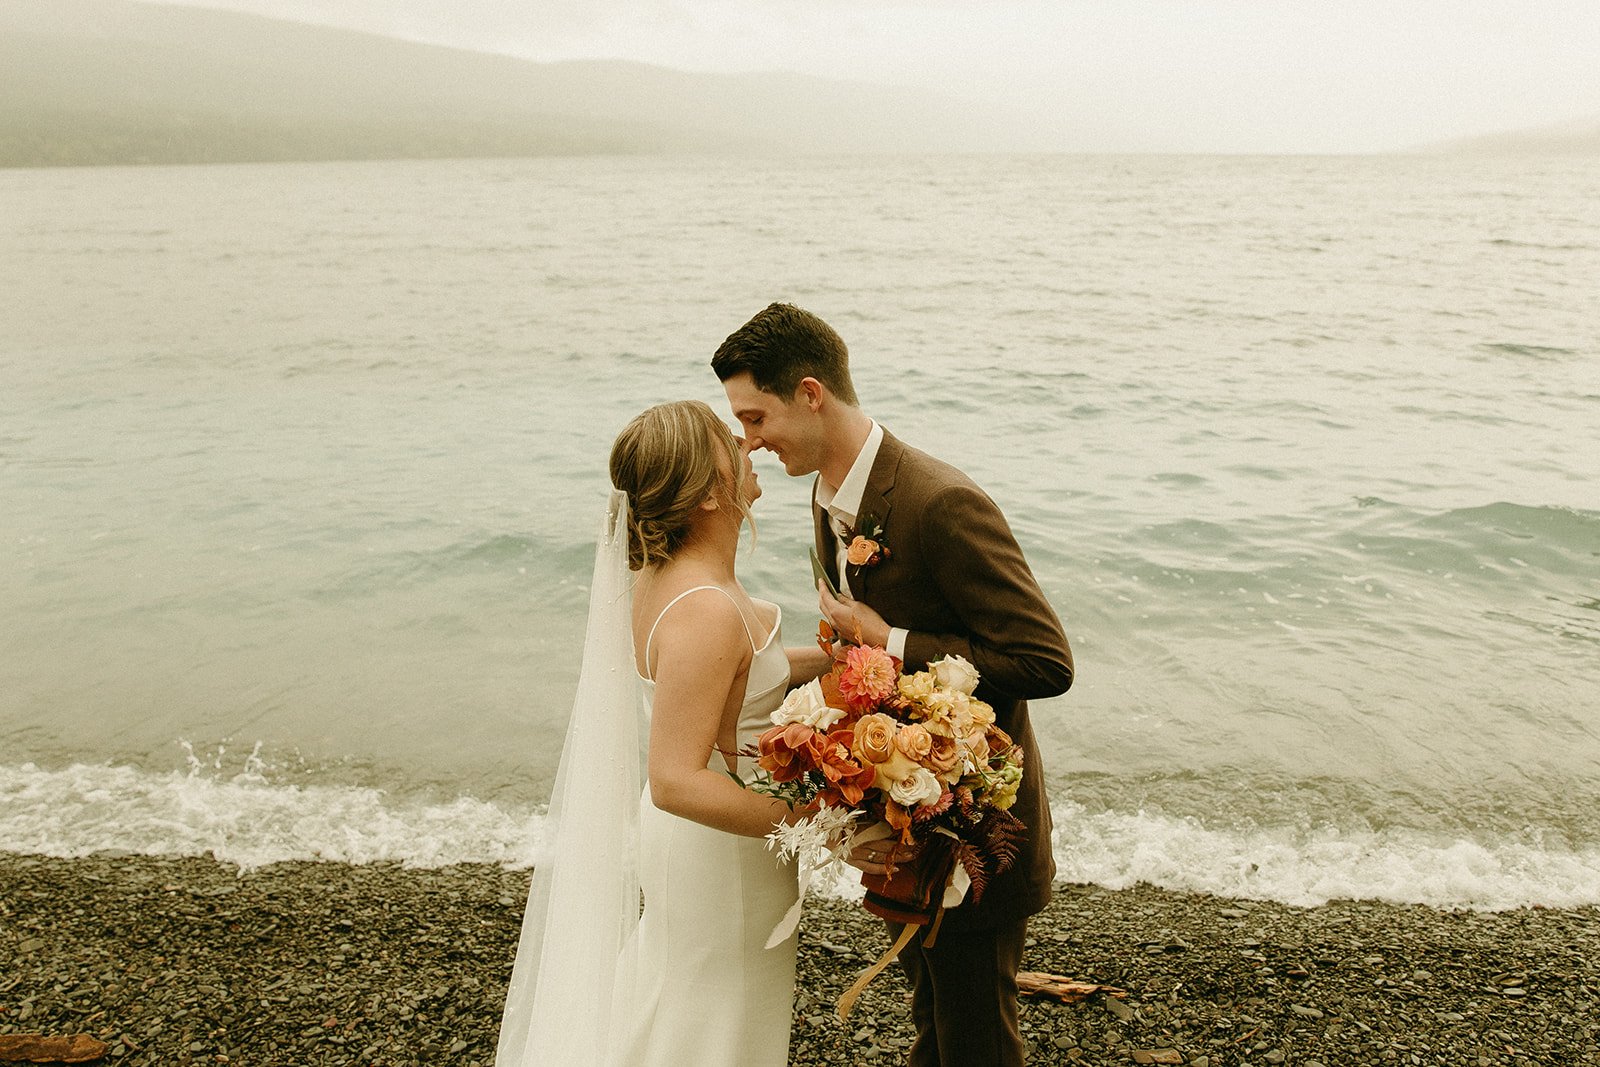 Beautiful Bride and groom photos at Glacier National Park